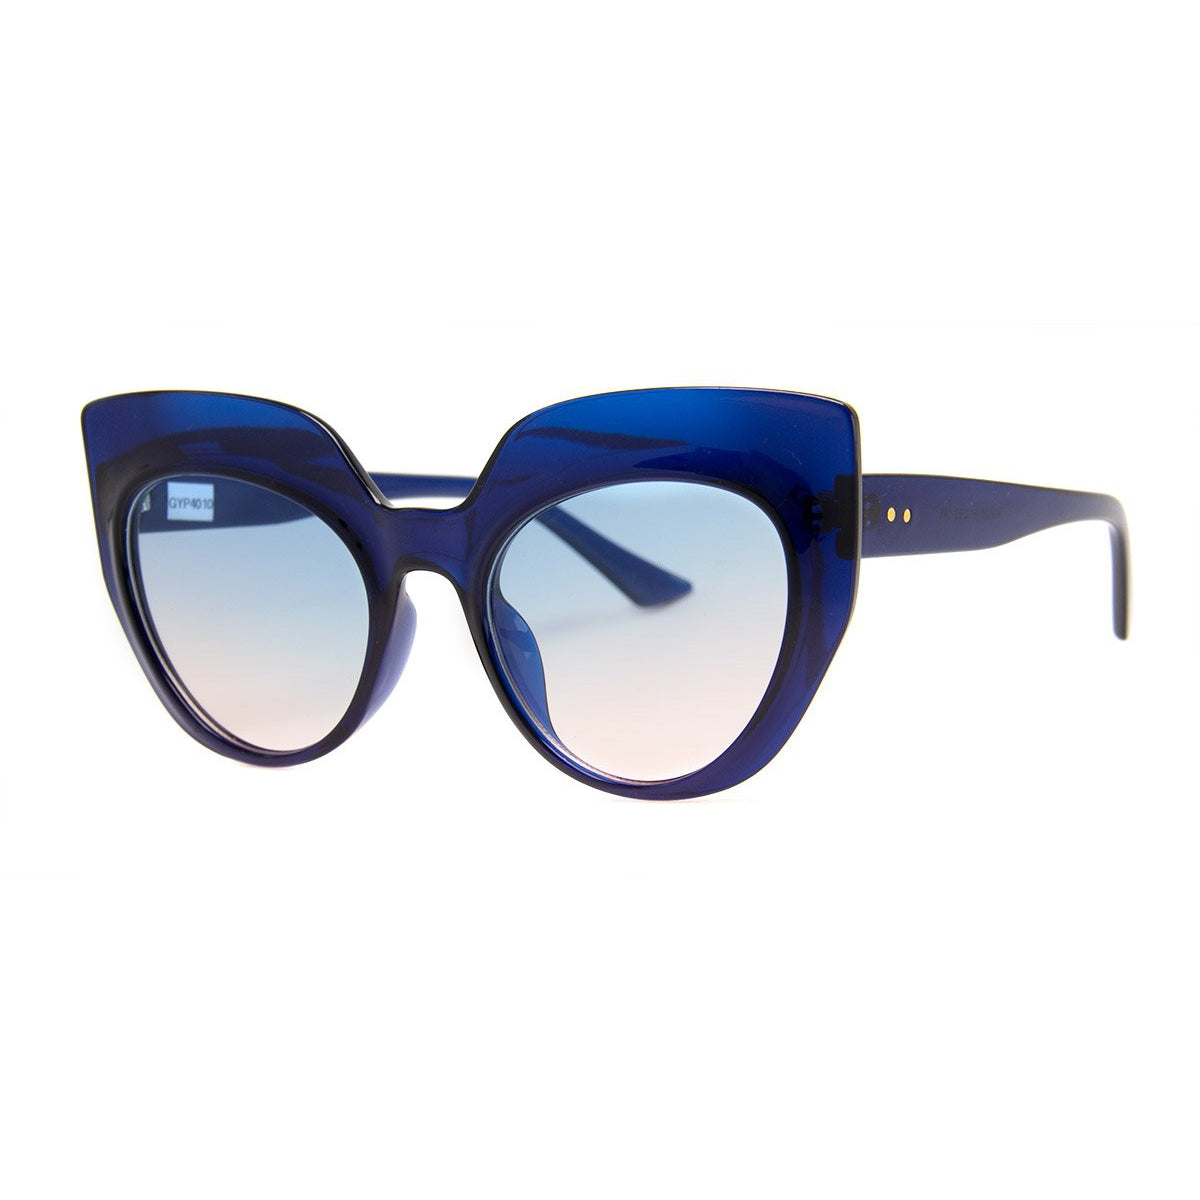 Grin Sunglasses - Blue